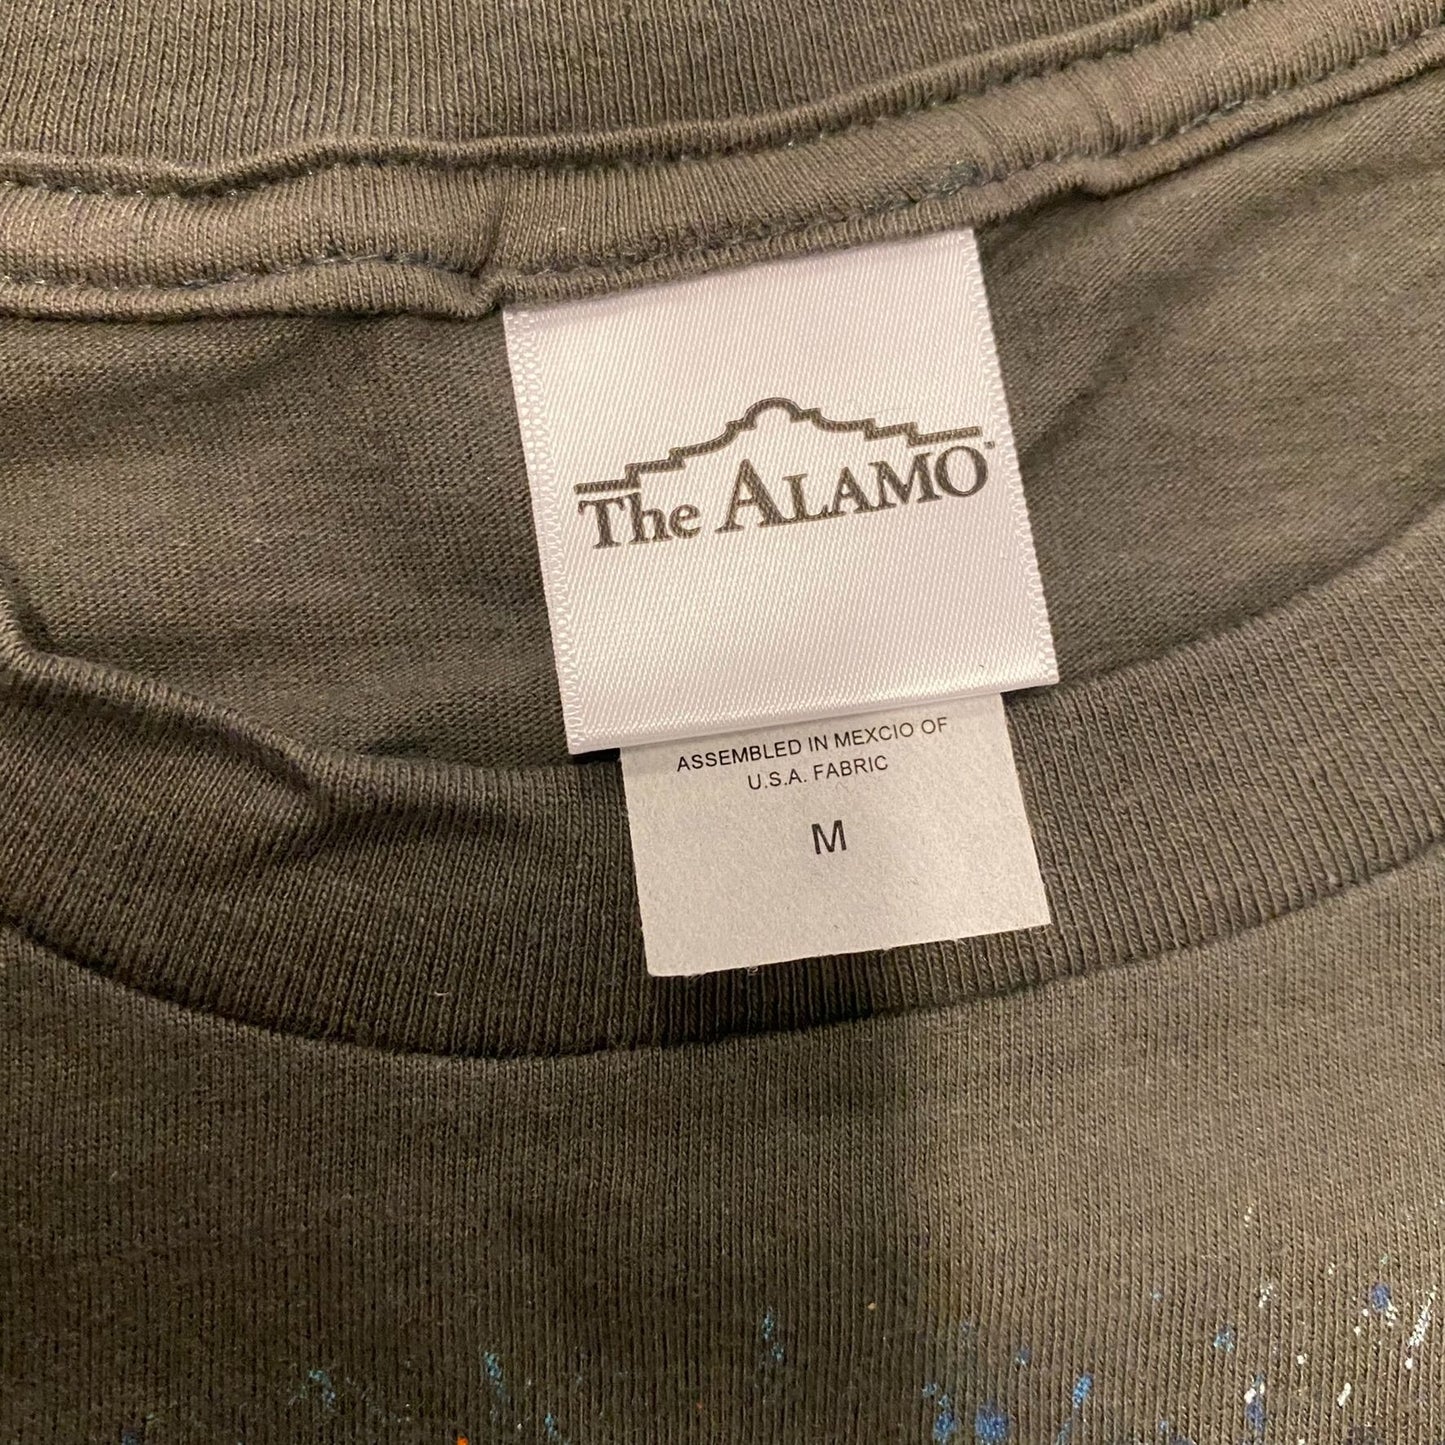 Alamo Texas Flag T-Shirt